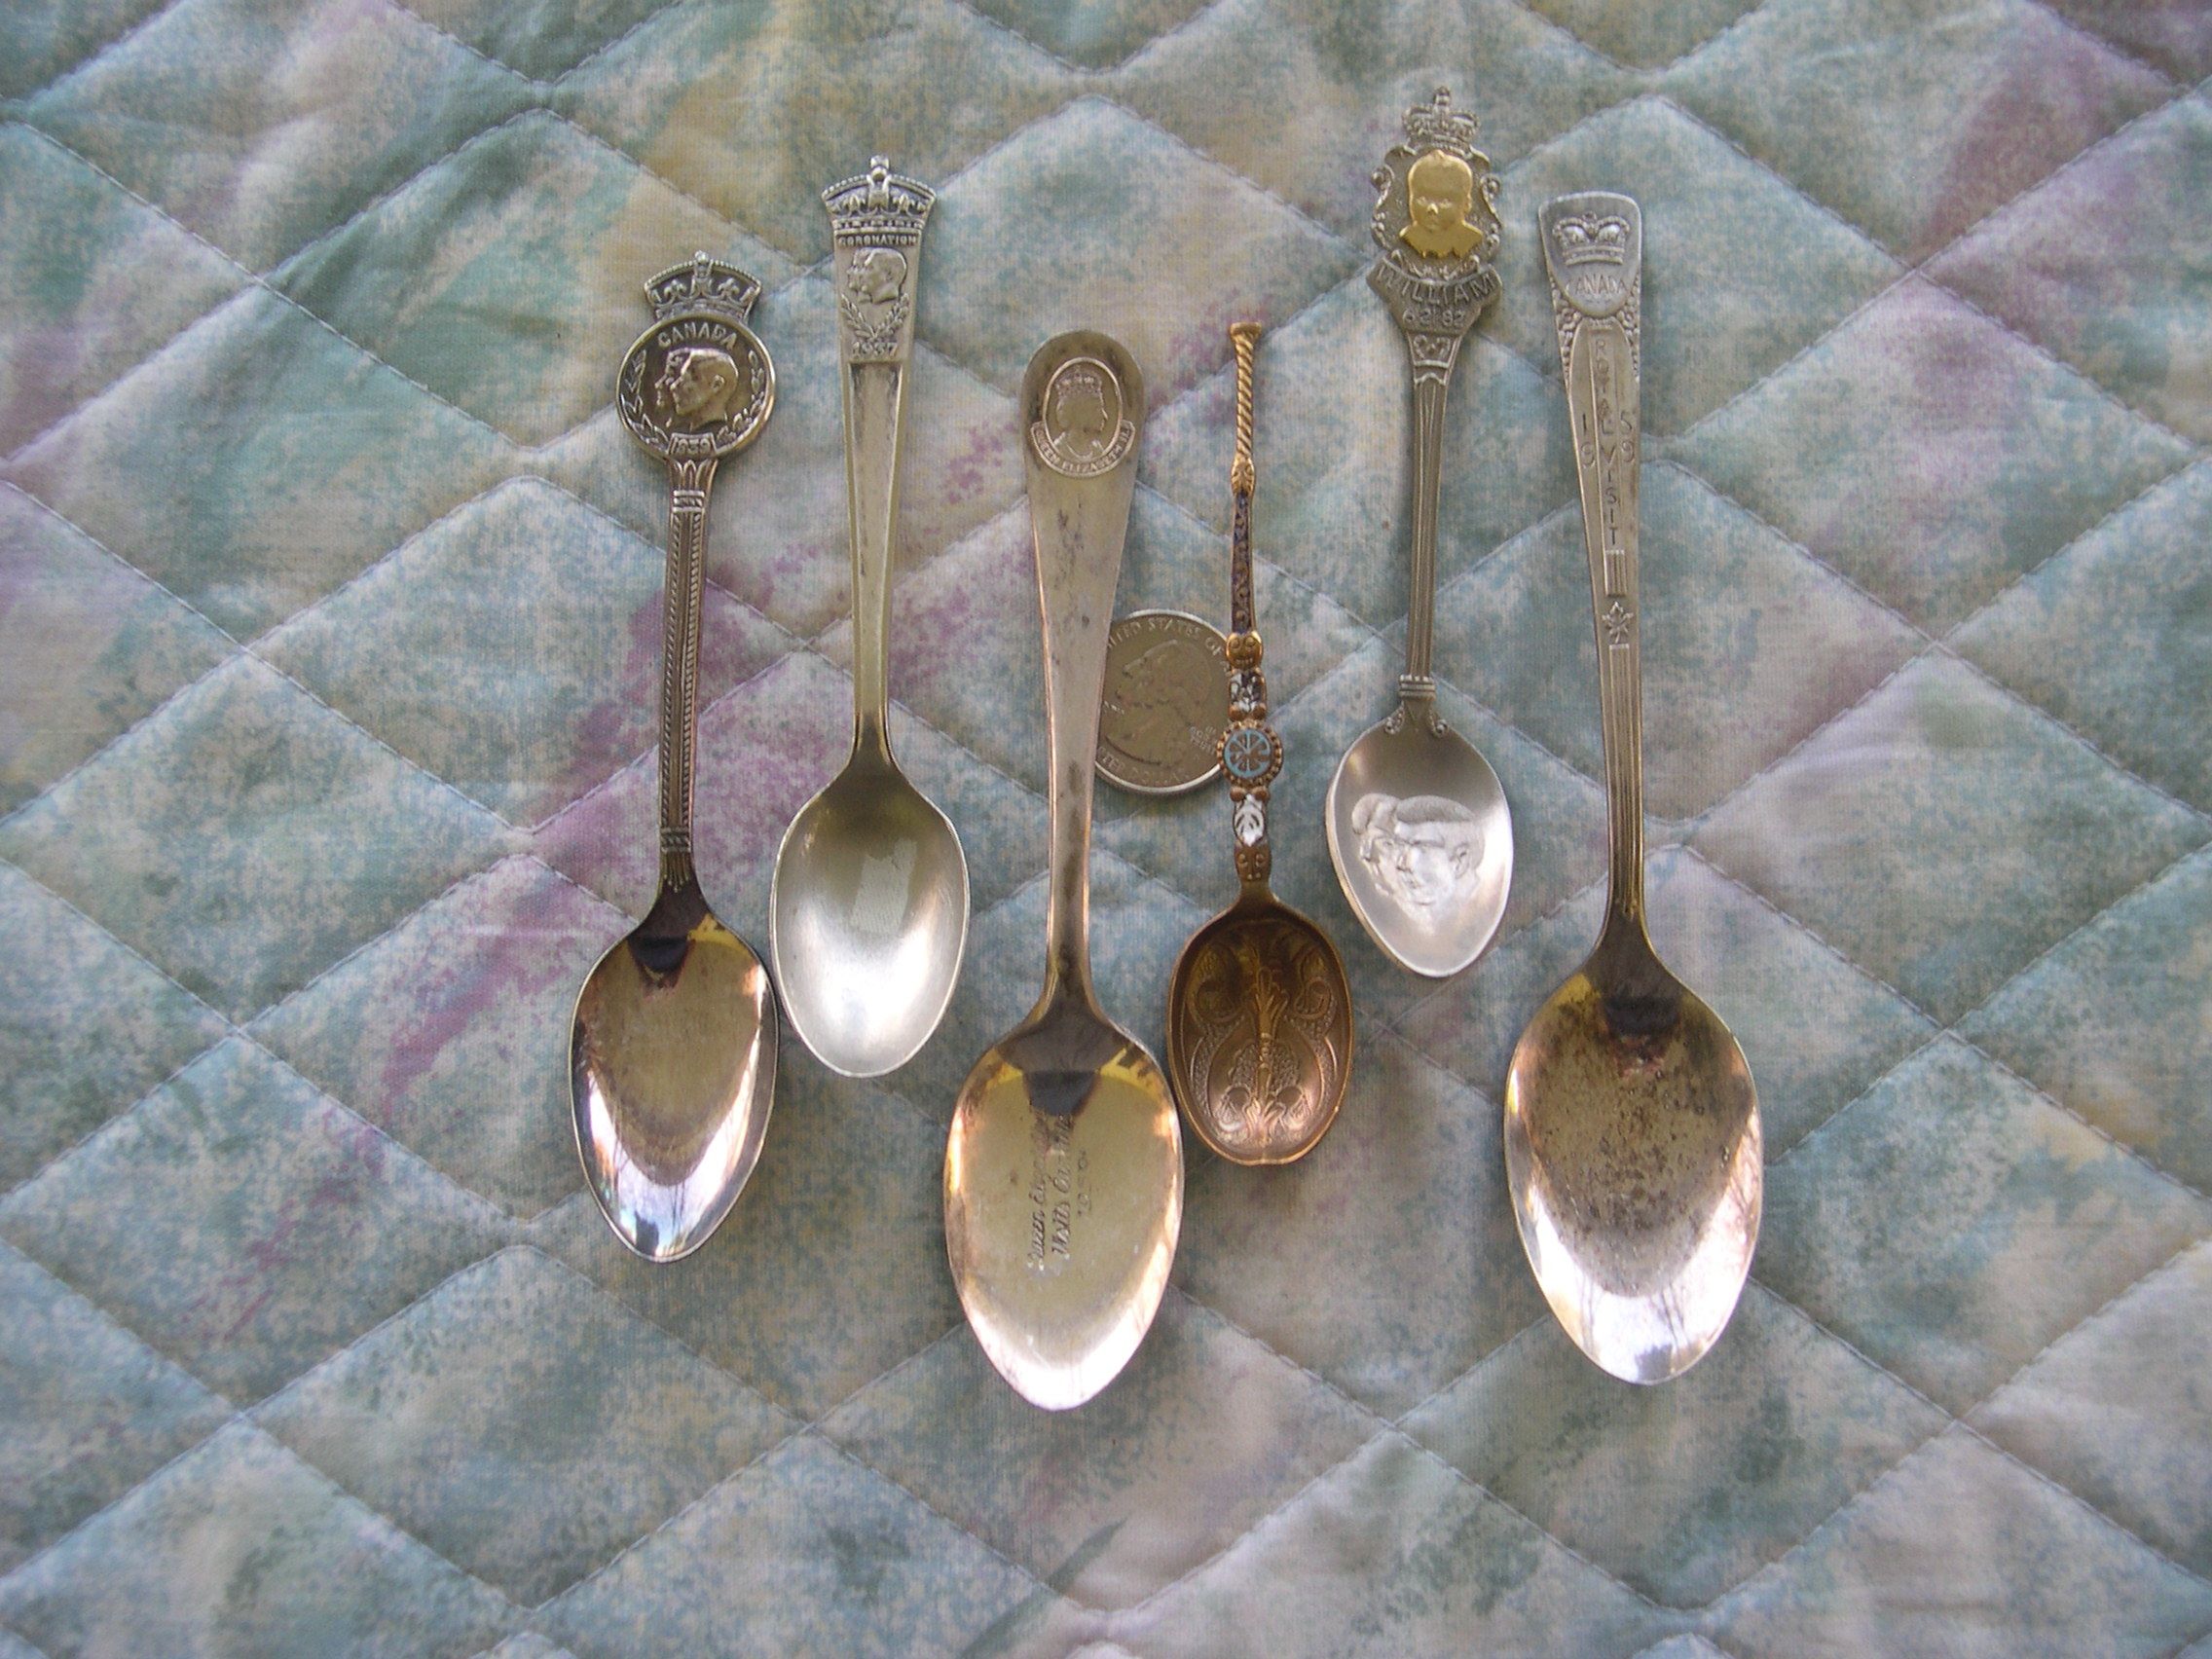 british royalty spoons